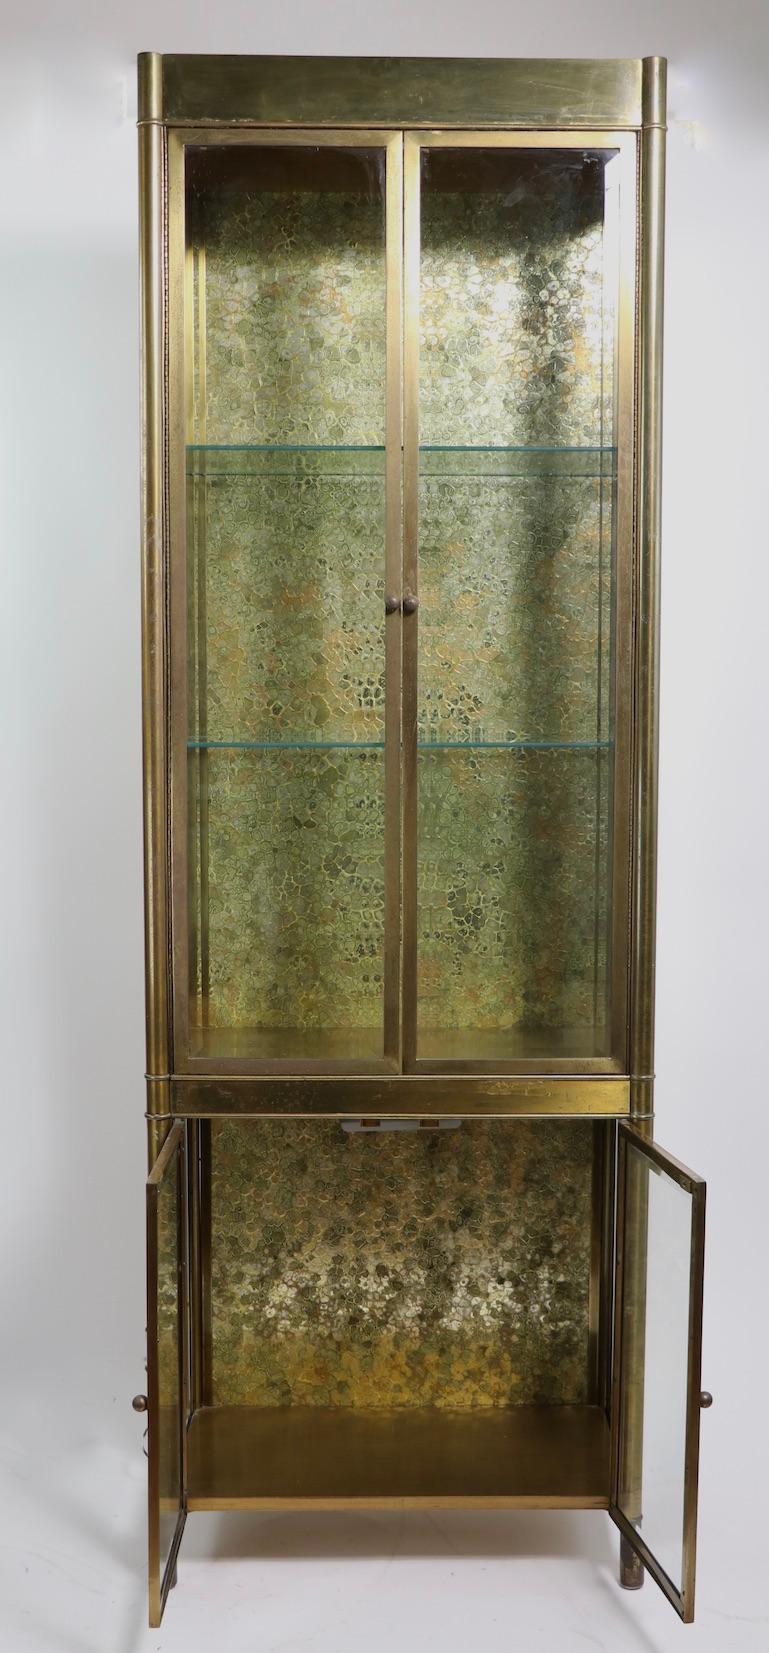 Brass and Glass Vitrine Display Cabinet by Mastercraft 1